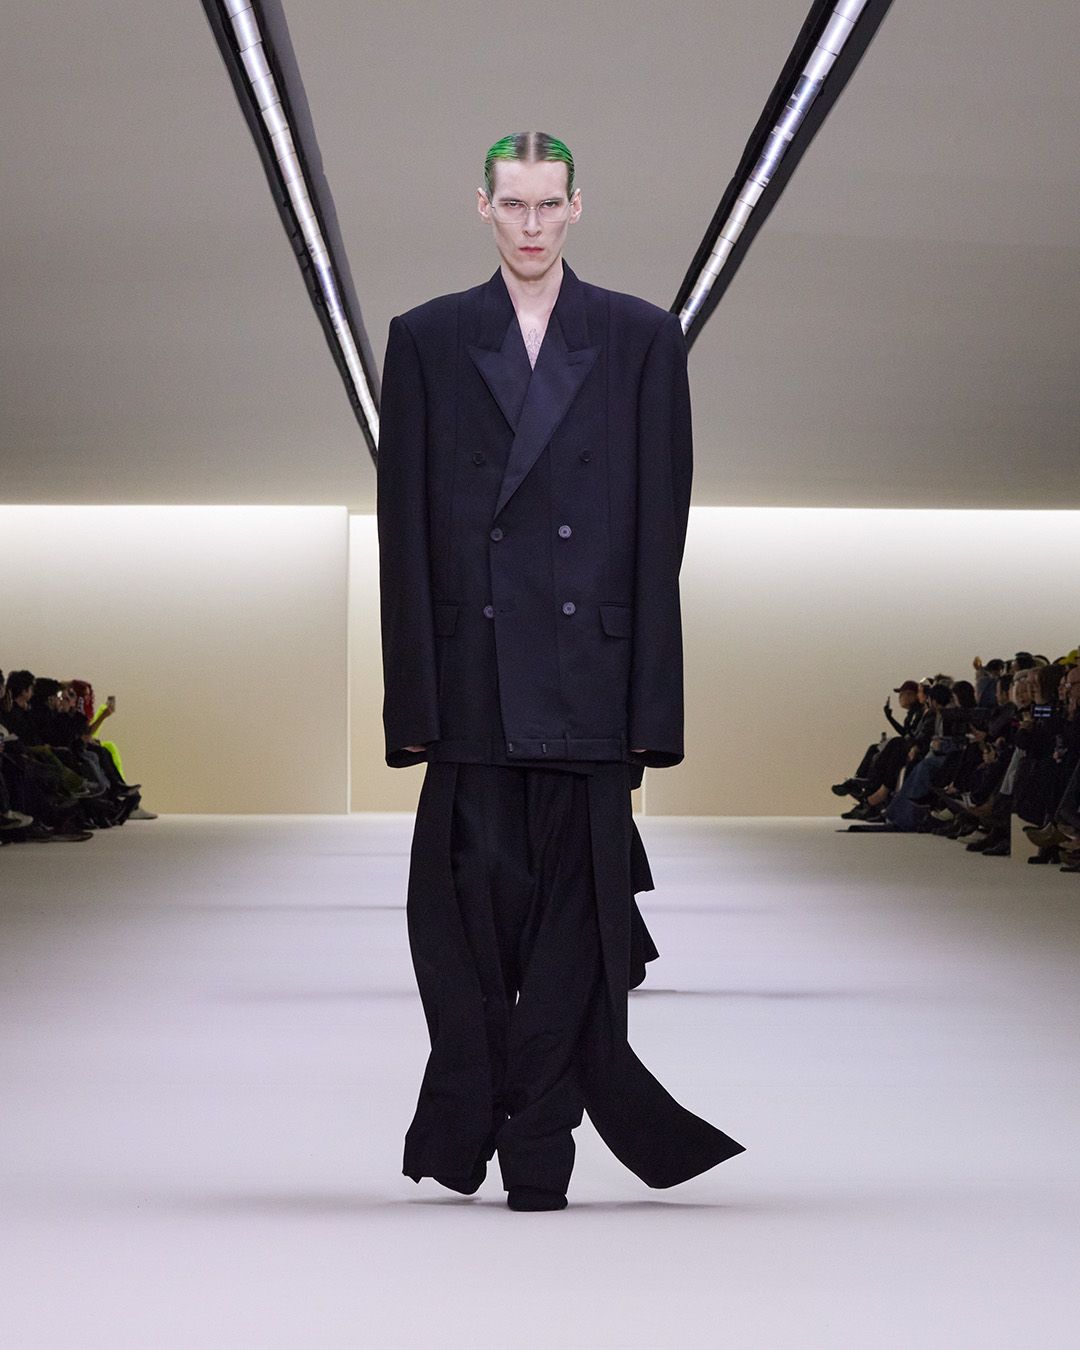 Fashion Week Outfit: Blazer Dress and Balenciaga Sneakers